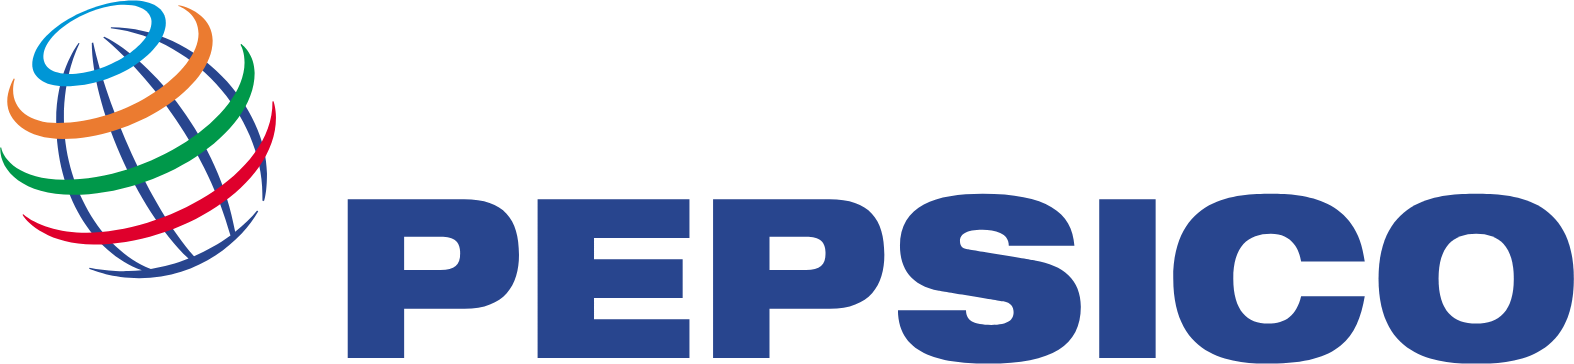 Pepsico logo large (transparent PNG)